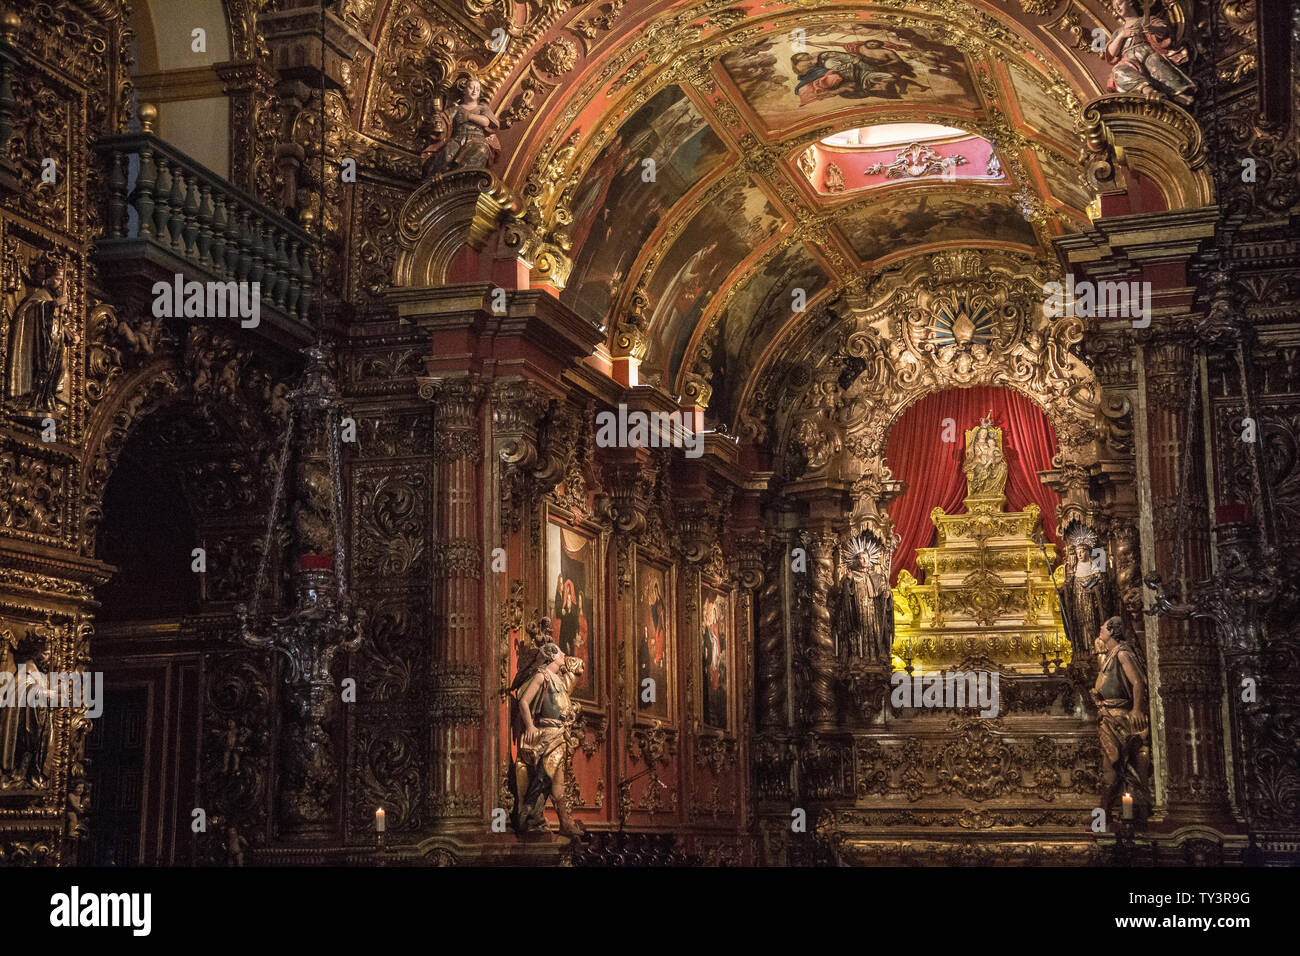 Río de Janeiro, Brasil - July 7, 2015: el Monasterio de Mosteiro de São Bento, la arquitectura barroca en Río de Janeiro. Foto de stock